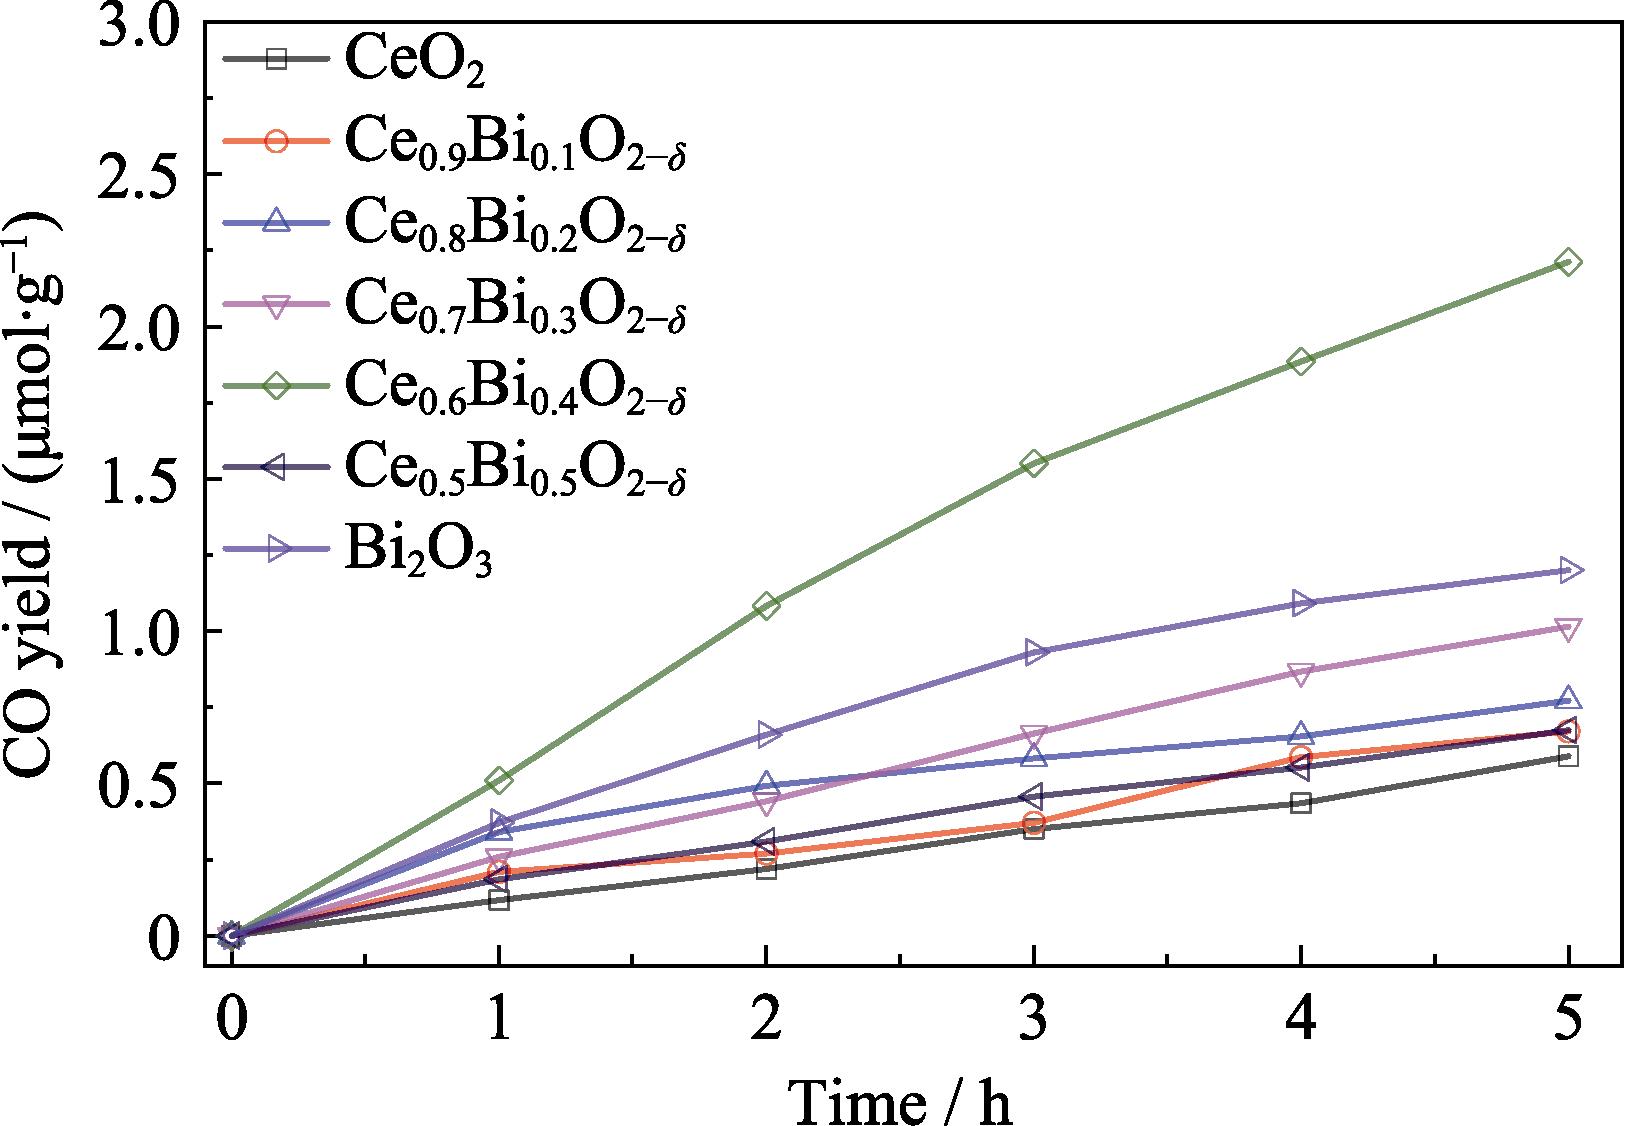 Time-dependent CO evolution over CeO2, Ce1-xBixO2-δ and Bi2O3